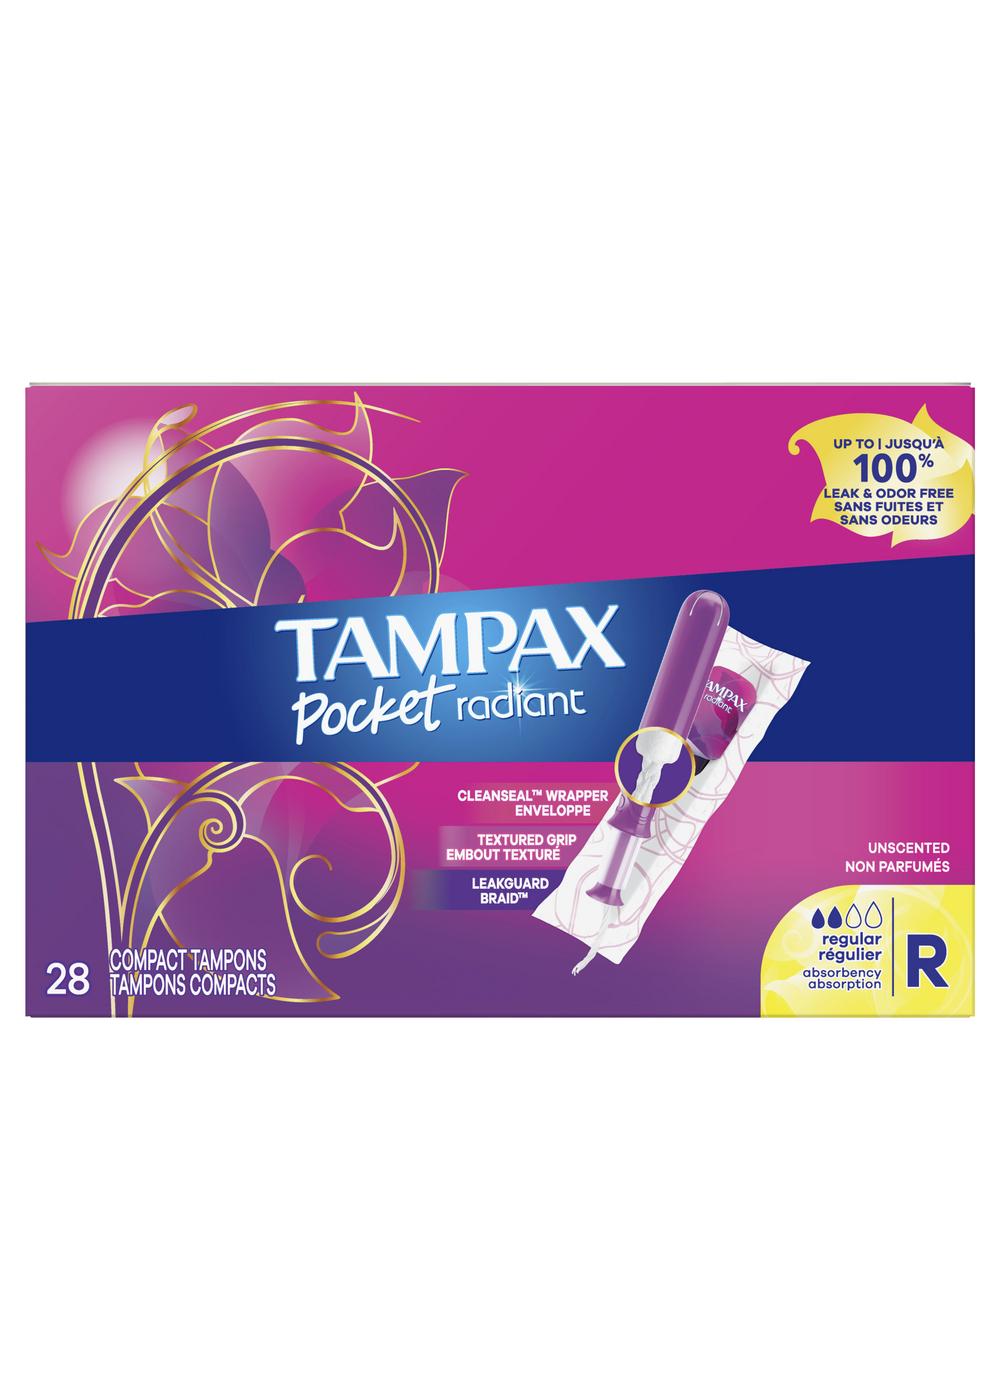 Tampax Pocket Radiant Compact Tampons - Regular ; image 1 of 2